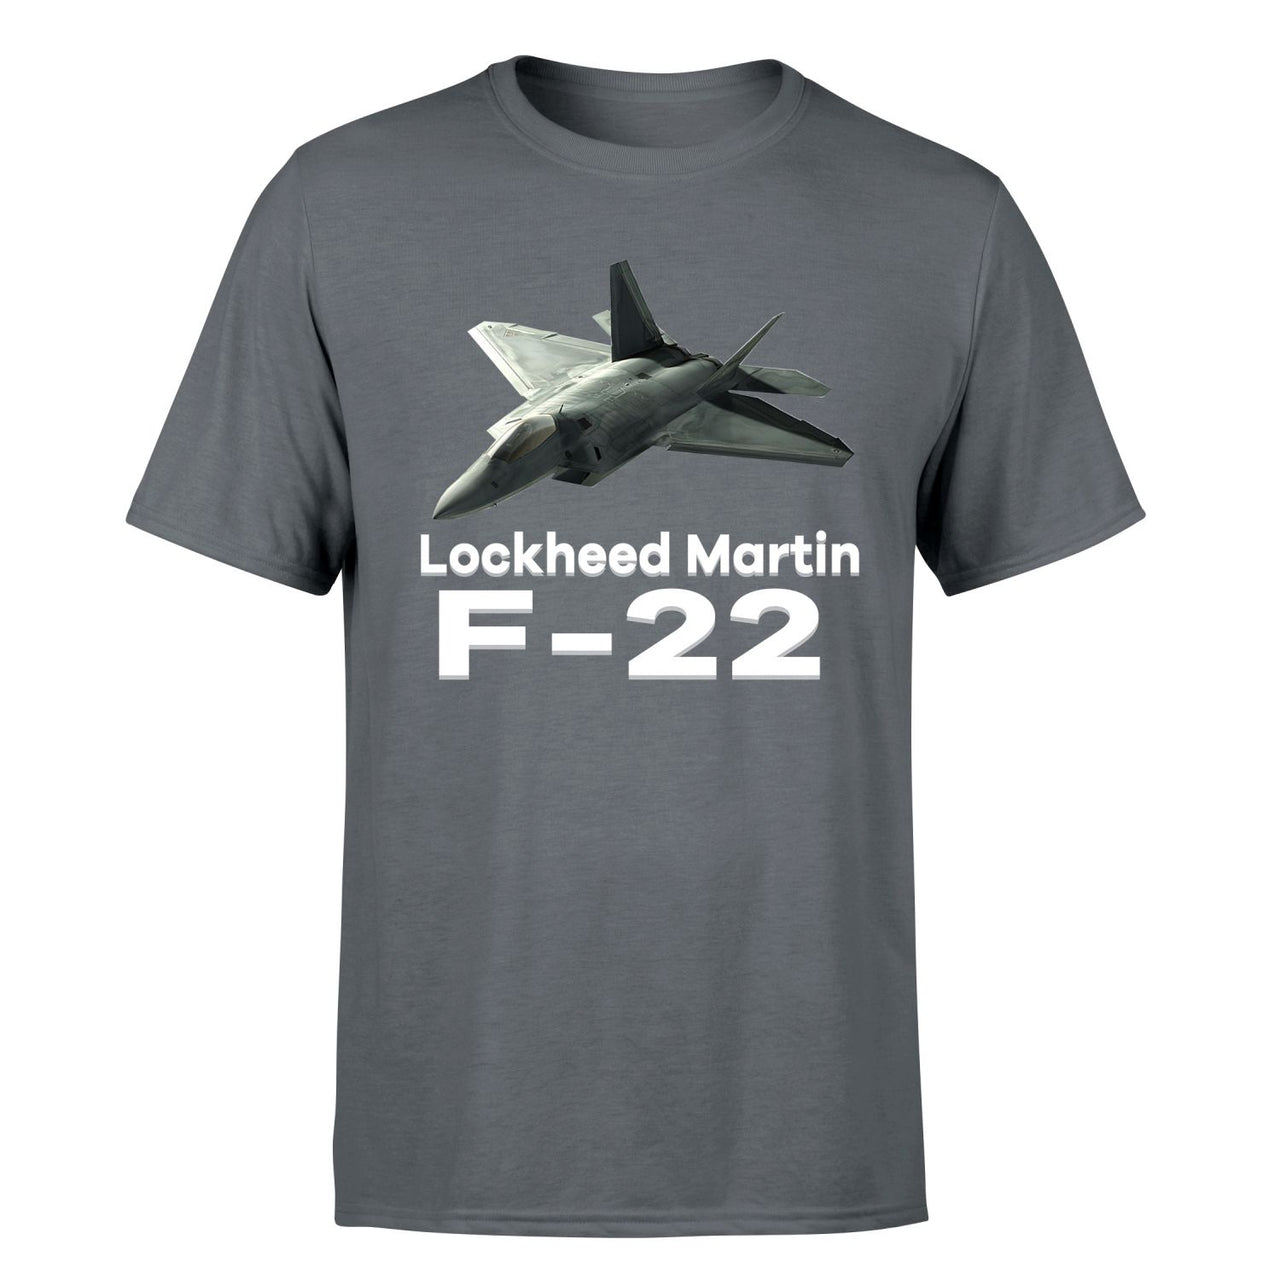 The Lockheed Martin F22 Designed T-Shirts